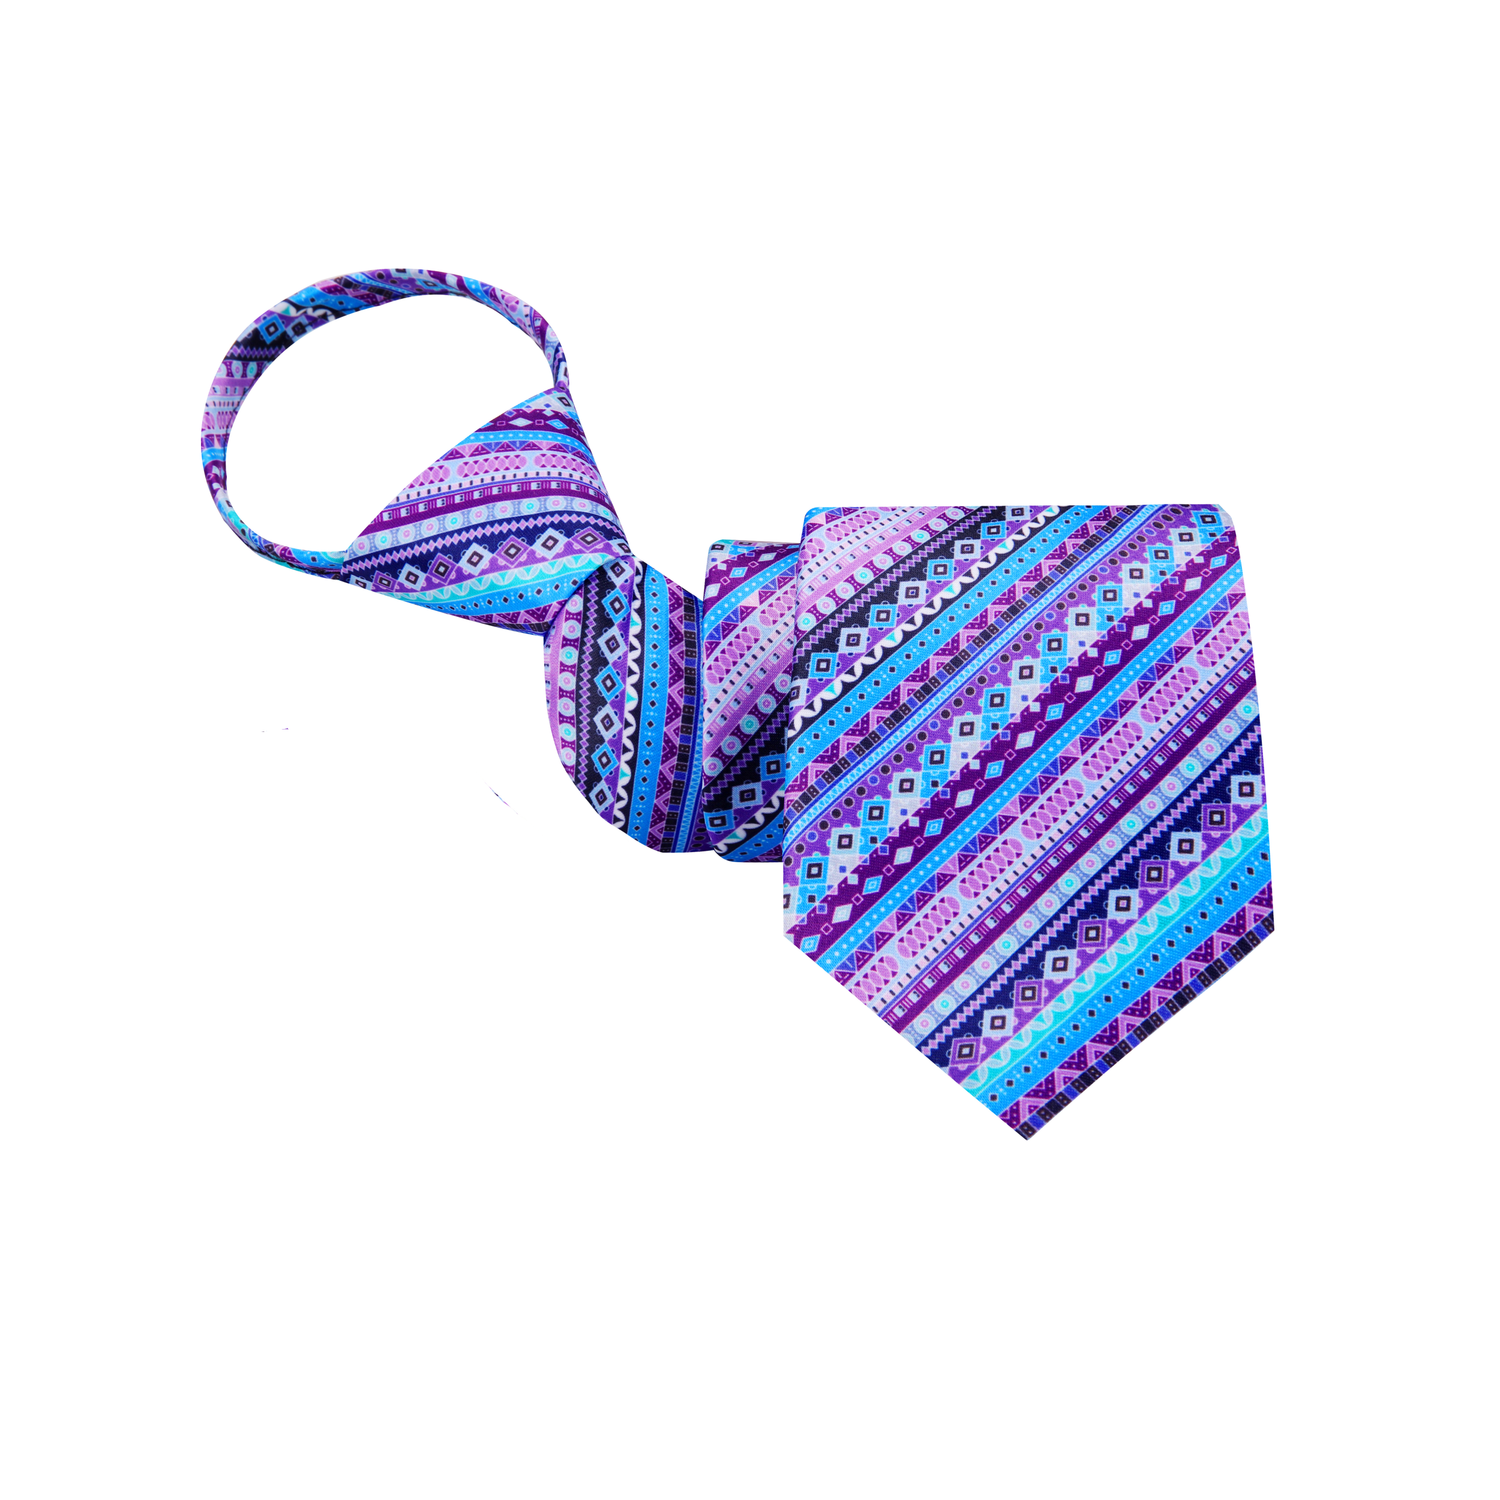 Single Zipper Tie: Purple, Blue Abstract Necktie